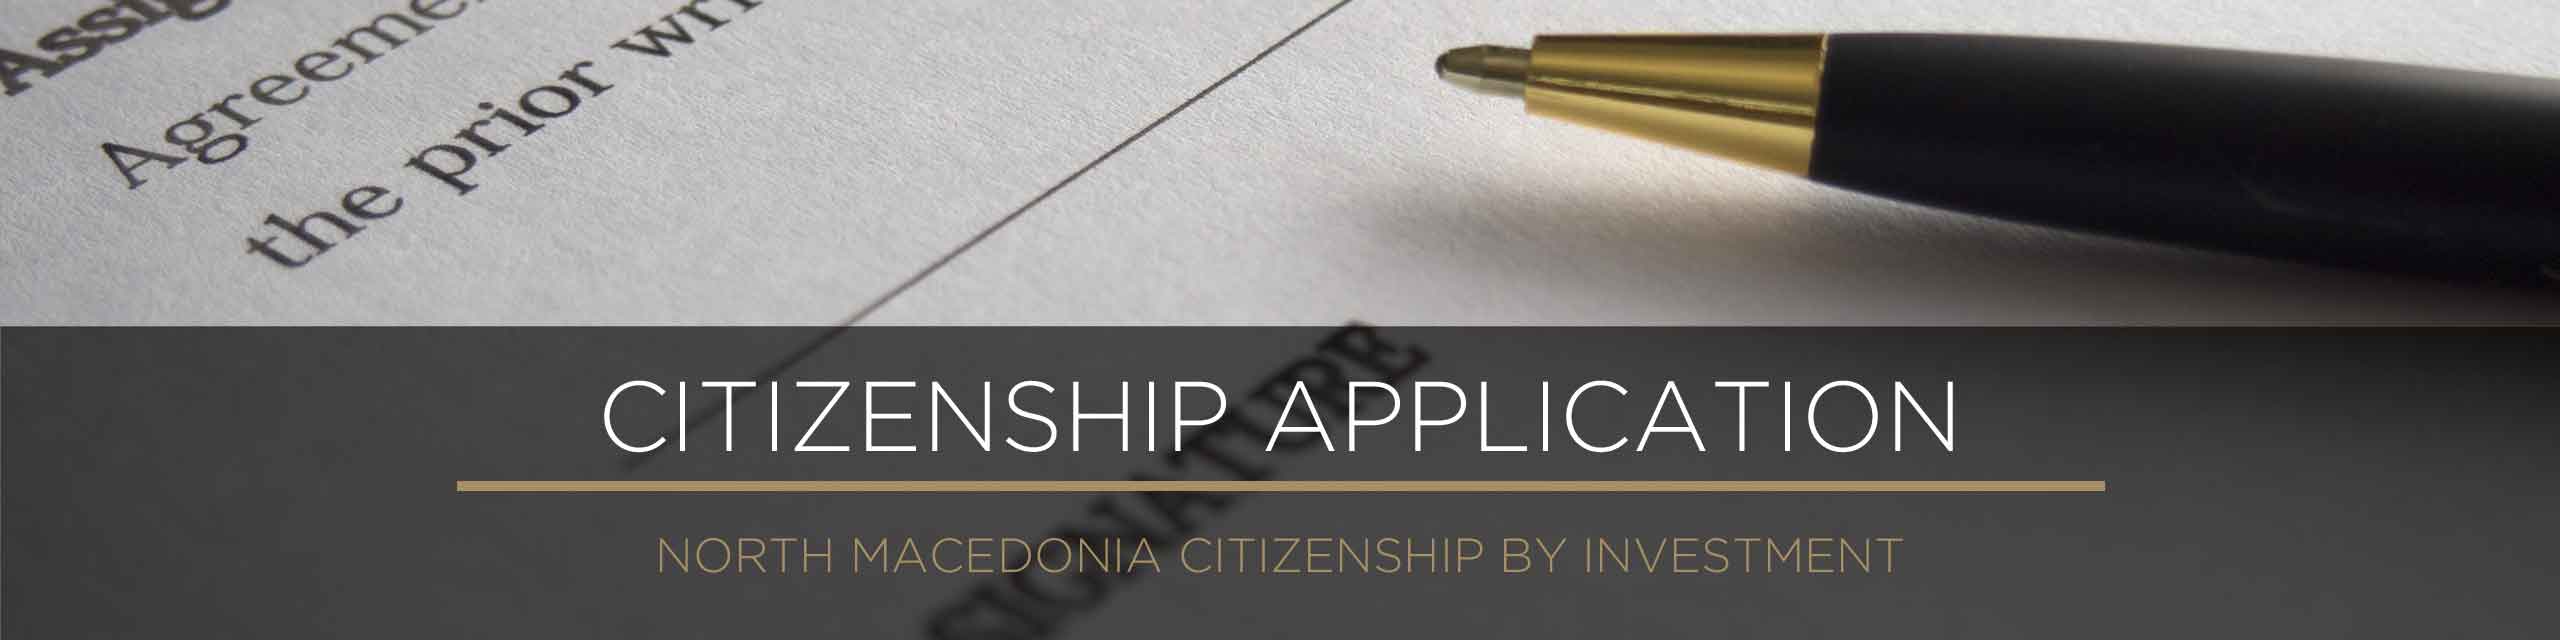 North Macedonia citizenship application